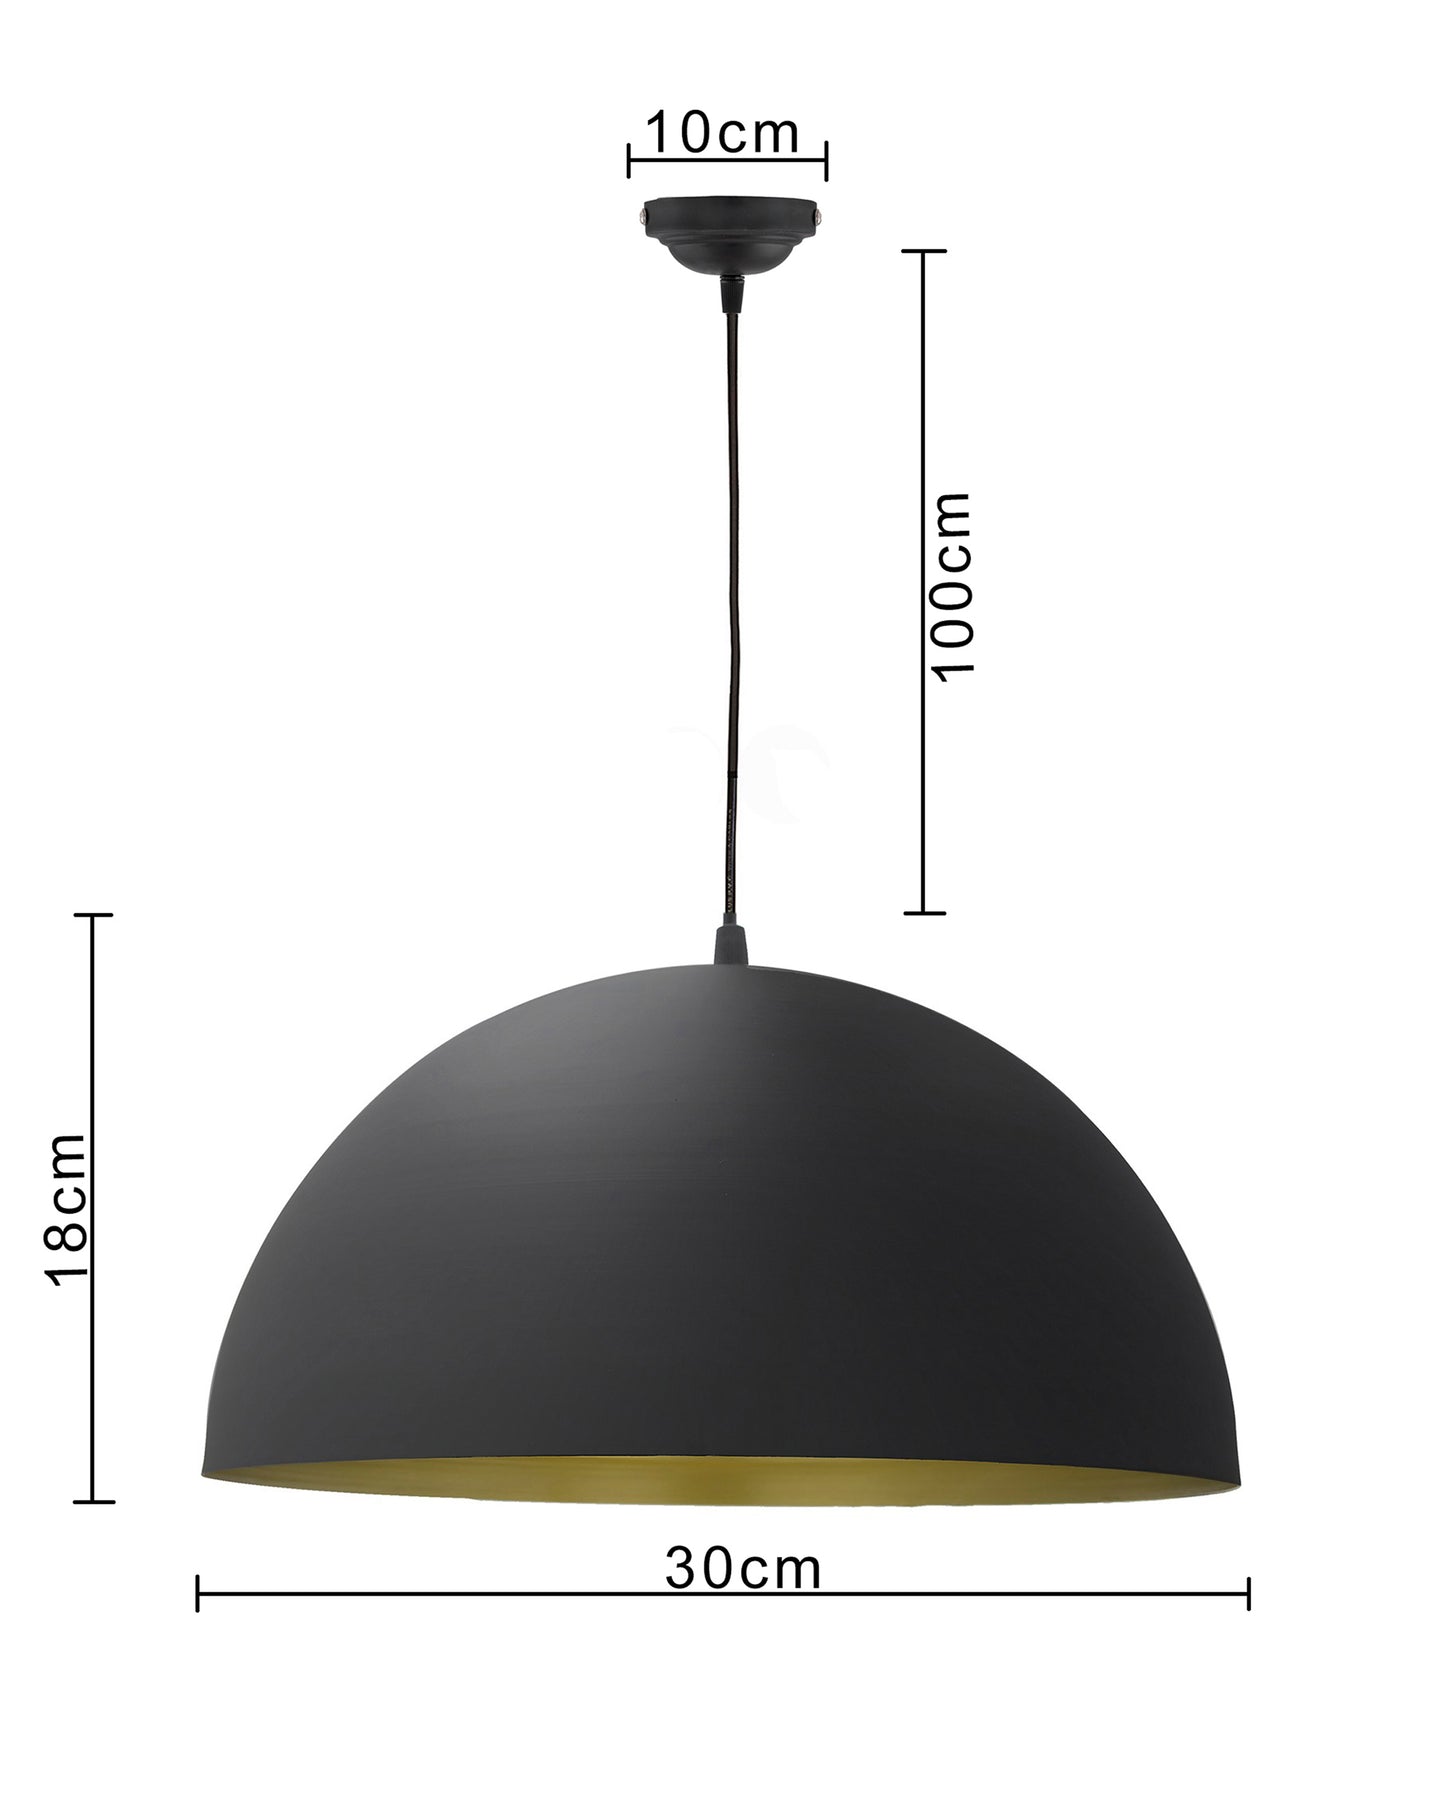 Metallic Black Pendant Hanging Light, Hanging Lamp 12", Industrial E27 lamp